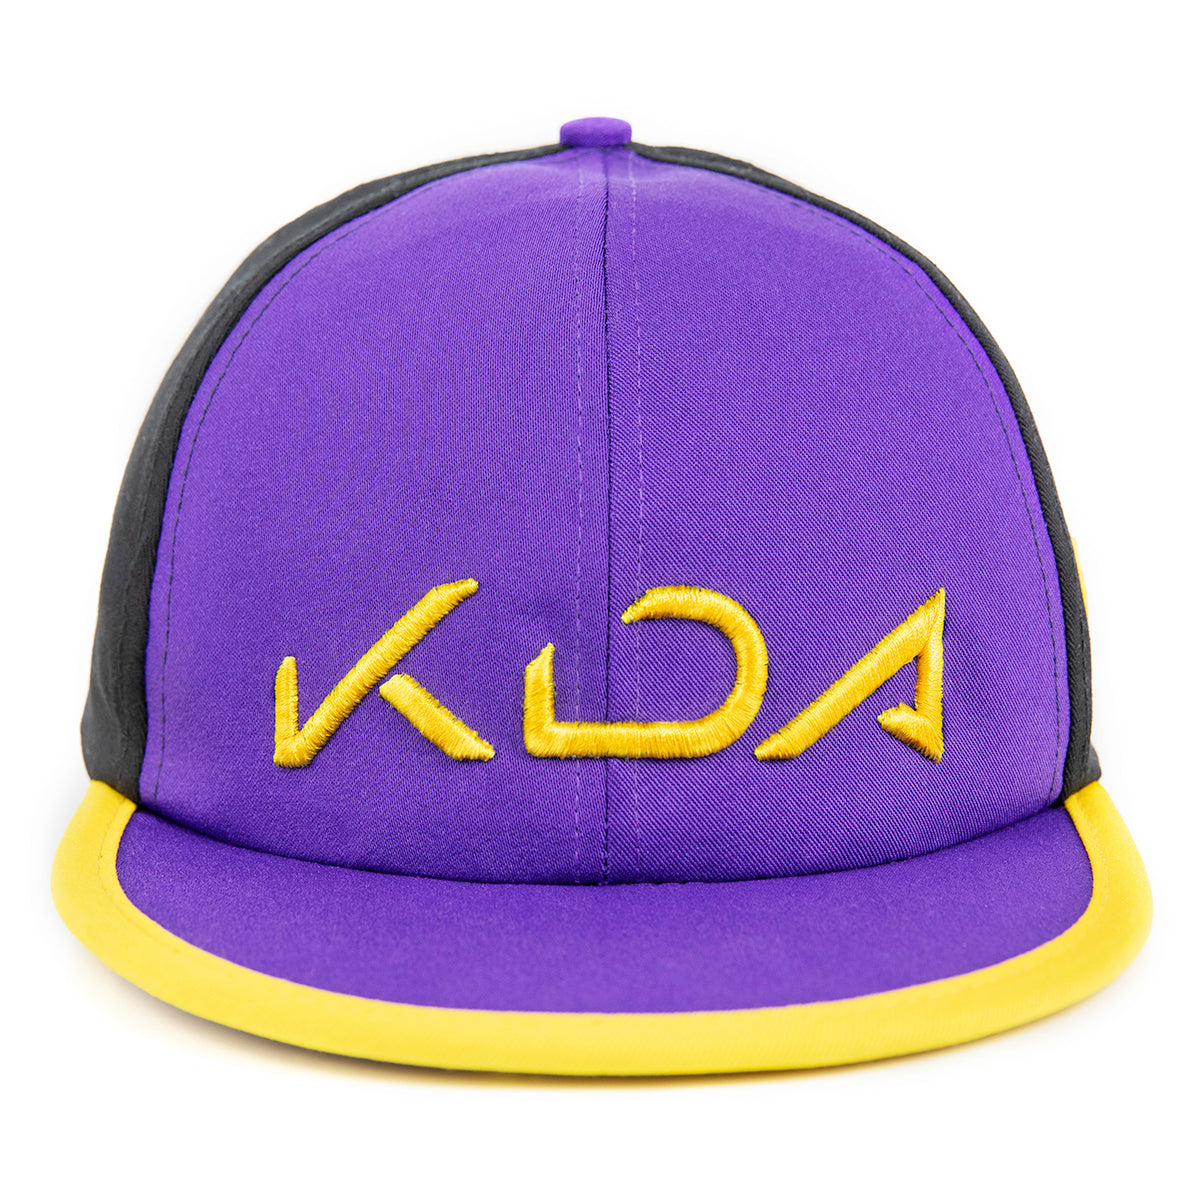 Cosplay Baseball Caps for Women Adjustable Purple Black Sun Hat Daily Wear